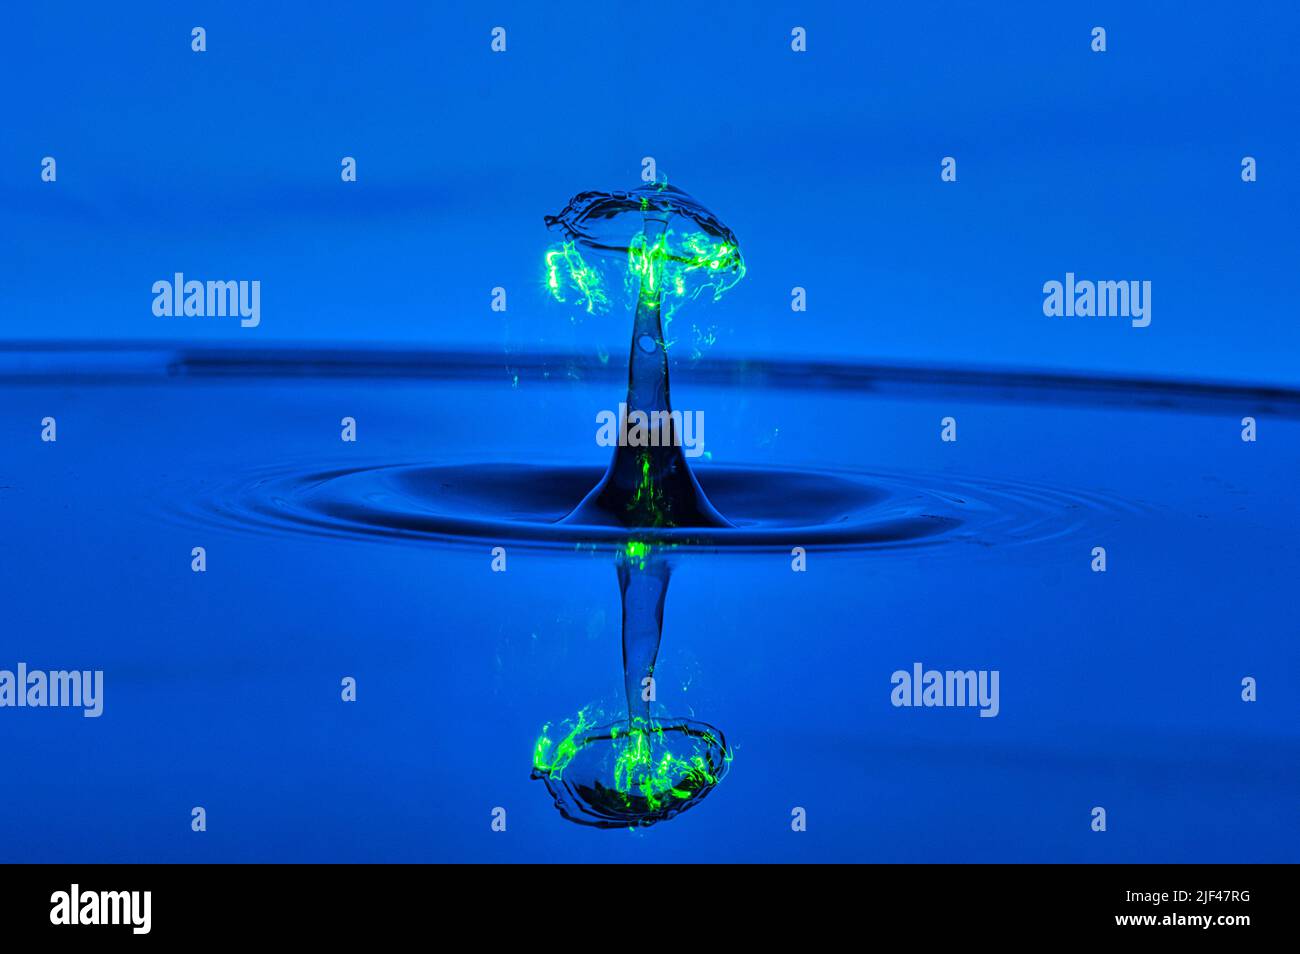 Wasser Wassertropfen Wassertropfenkollision in blau grün wie Atompilz, colliding water droplets looking like mushroom cloud electric storm Stock Photo